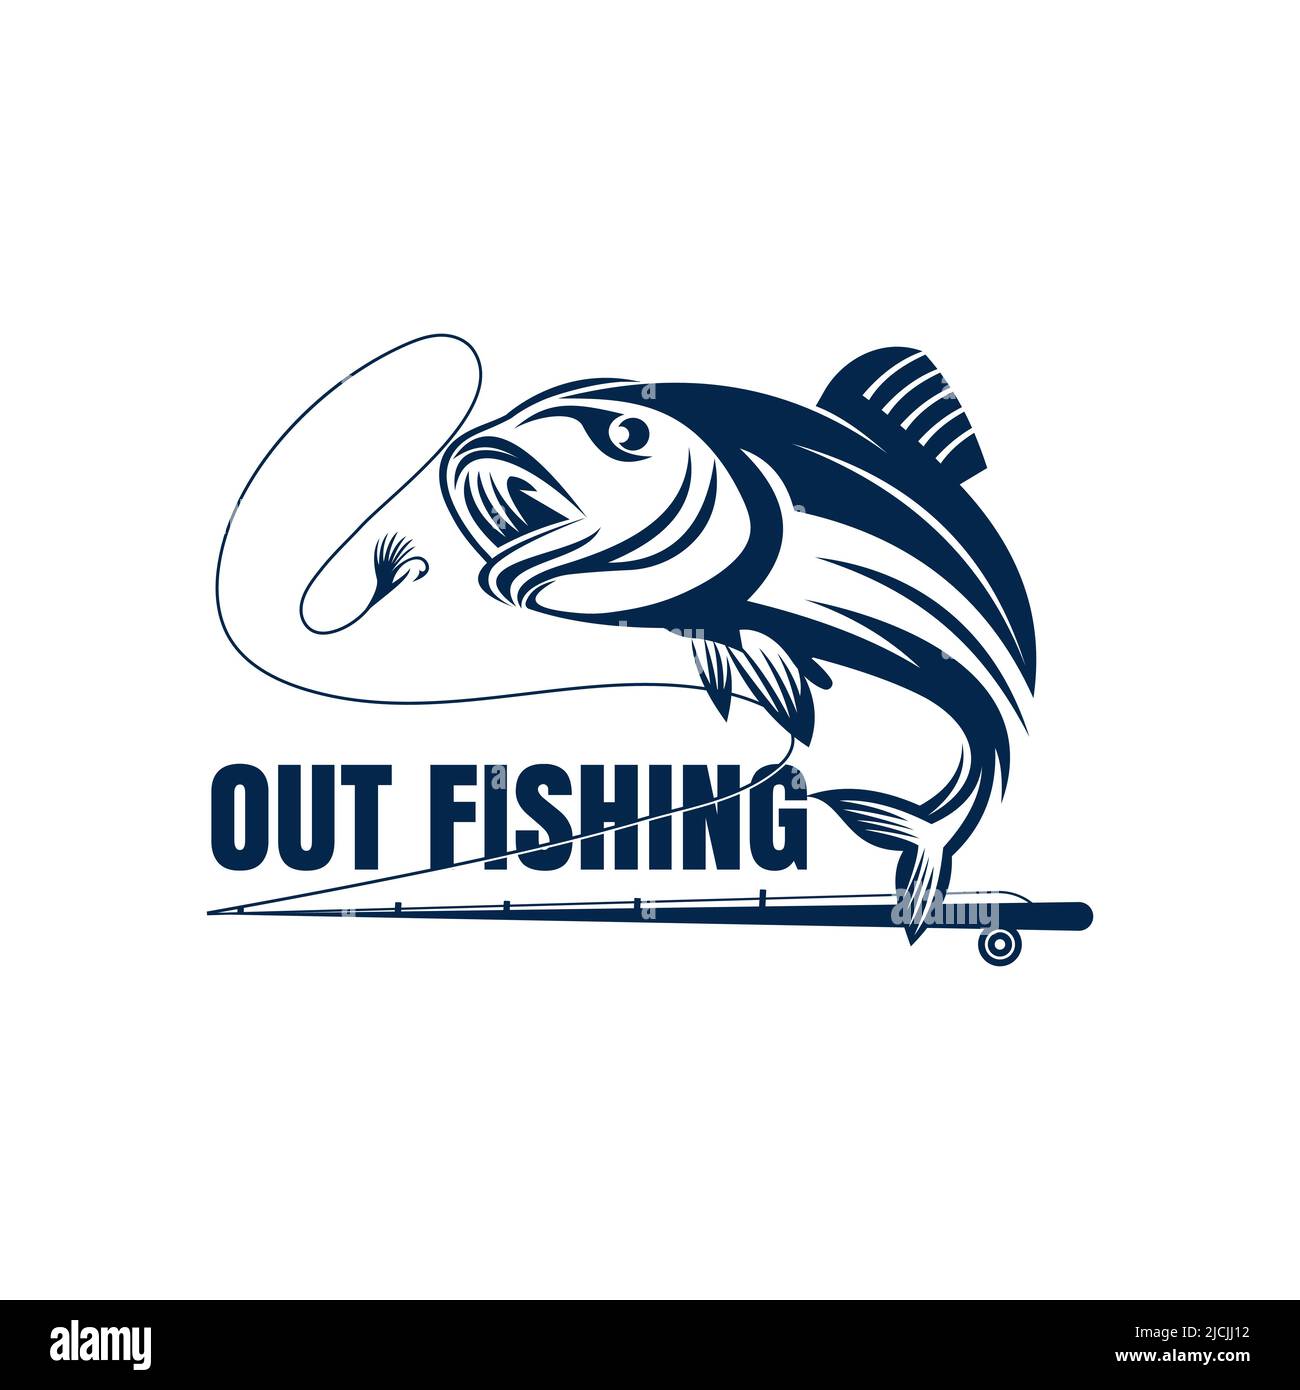 Fishing logo design illustration. Fishing sports logo template Stock Vector  Image & Art - Alamy